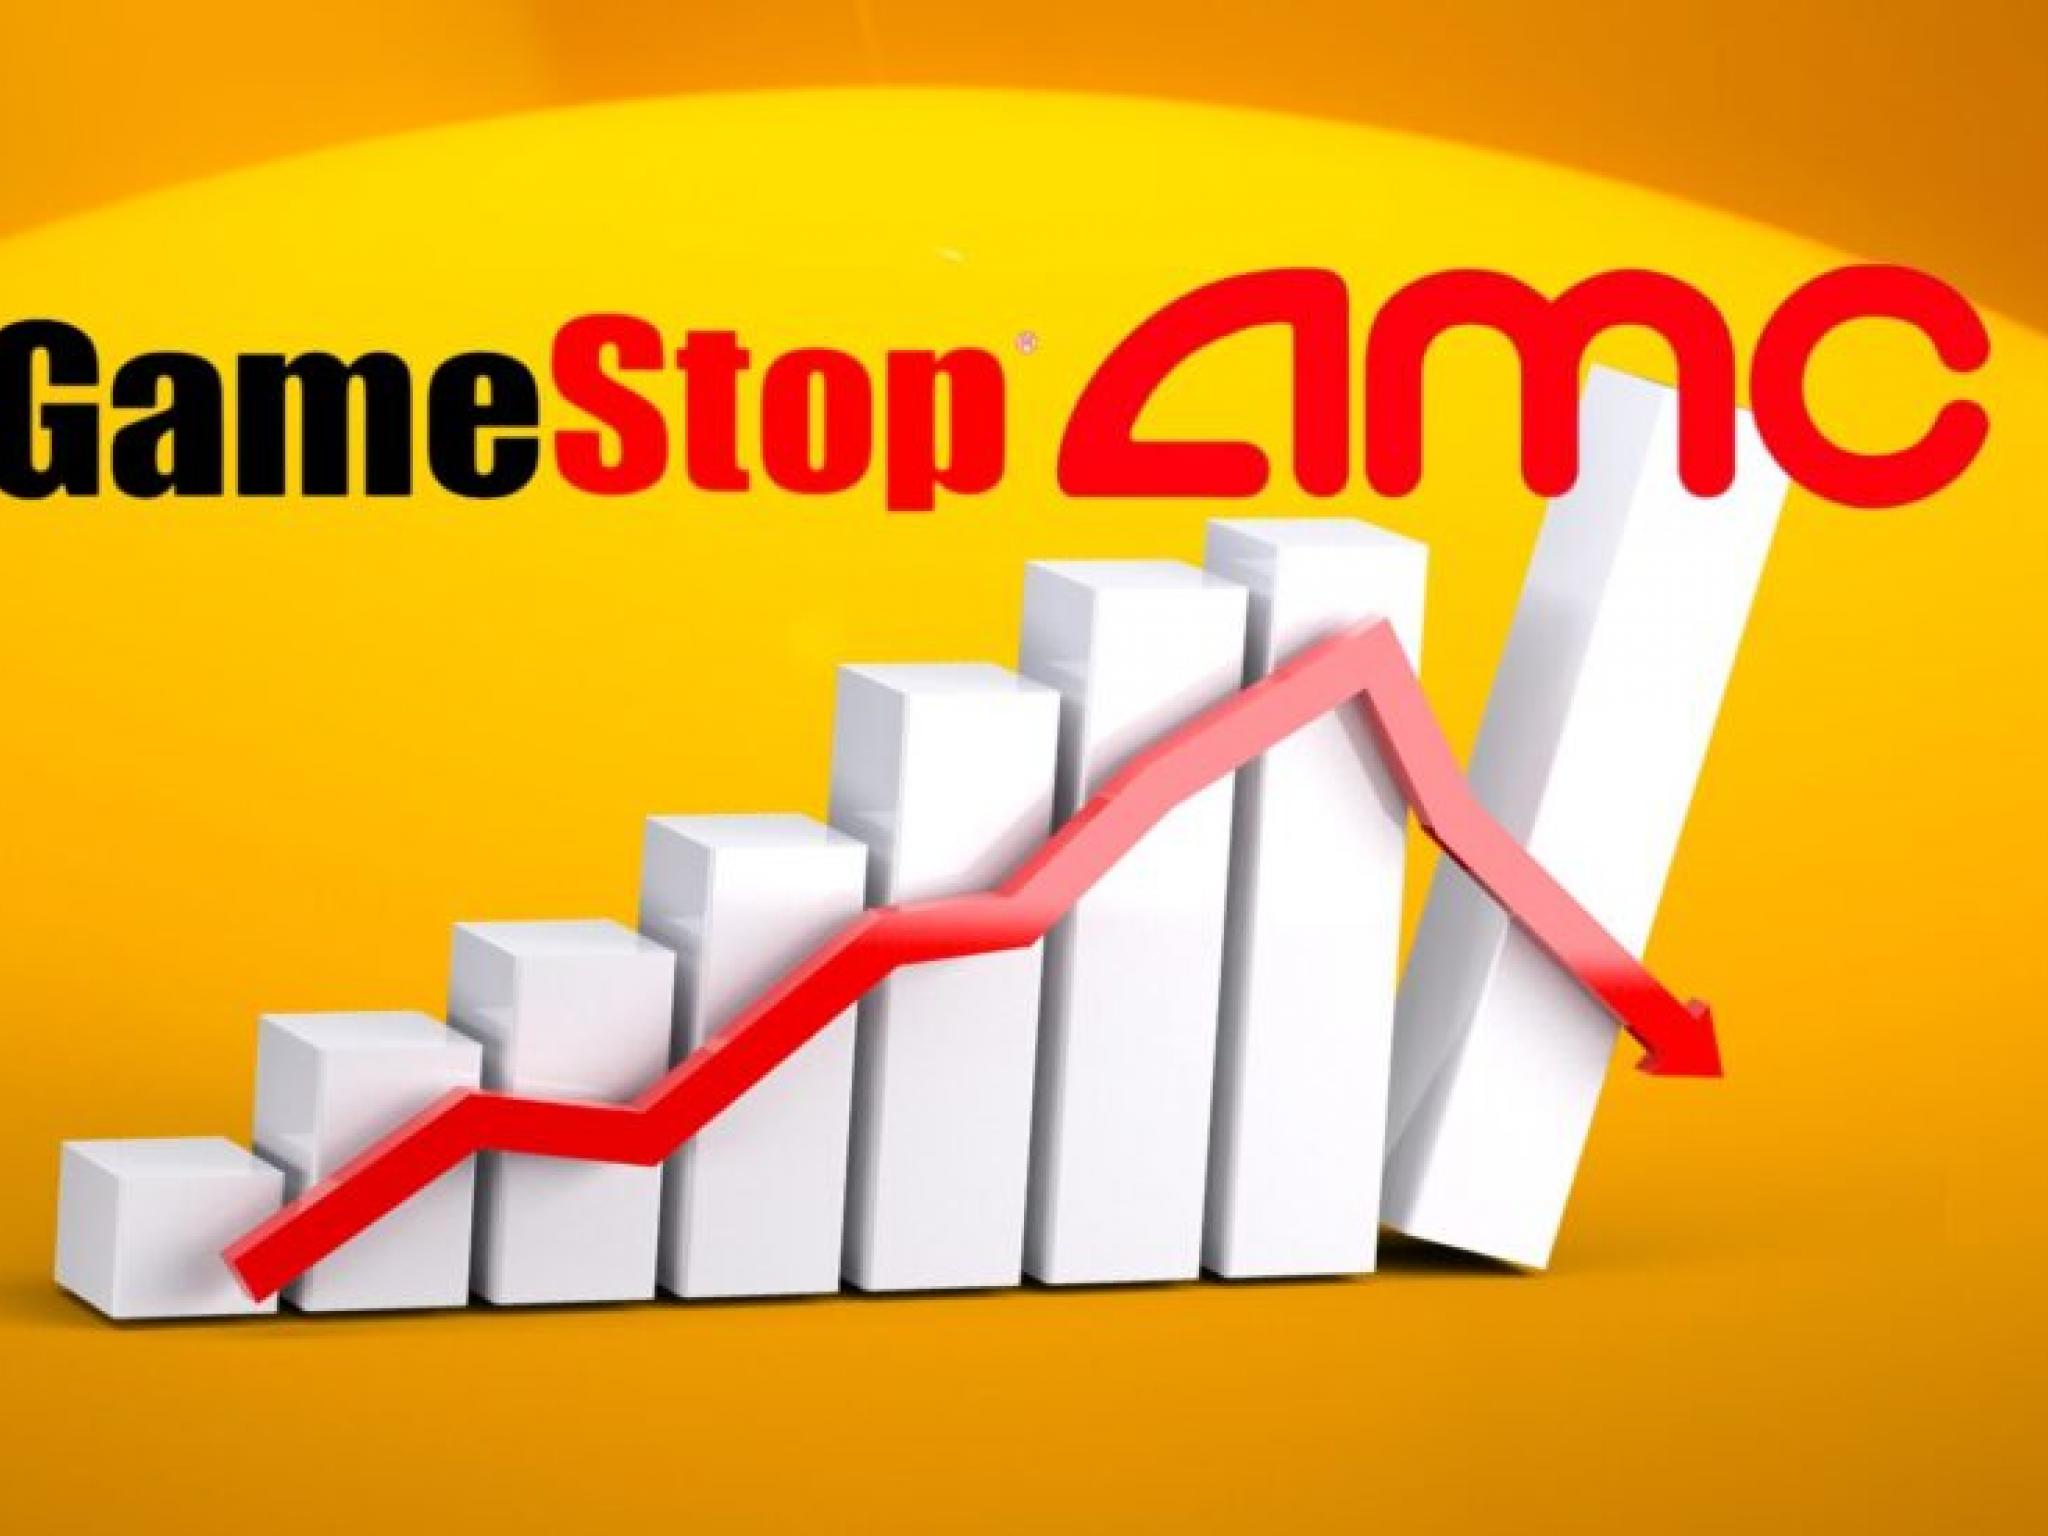  gamestop-amc-stock-in-freefall-wednesday-is-2024-meme-stock-rally-over 